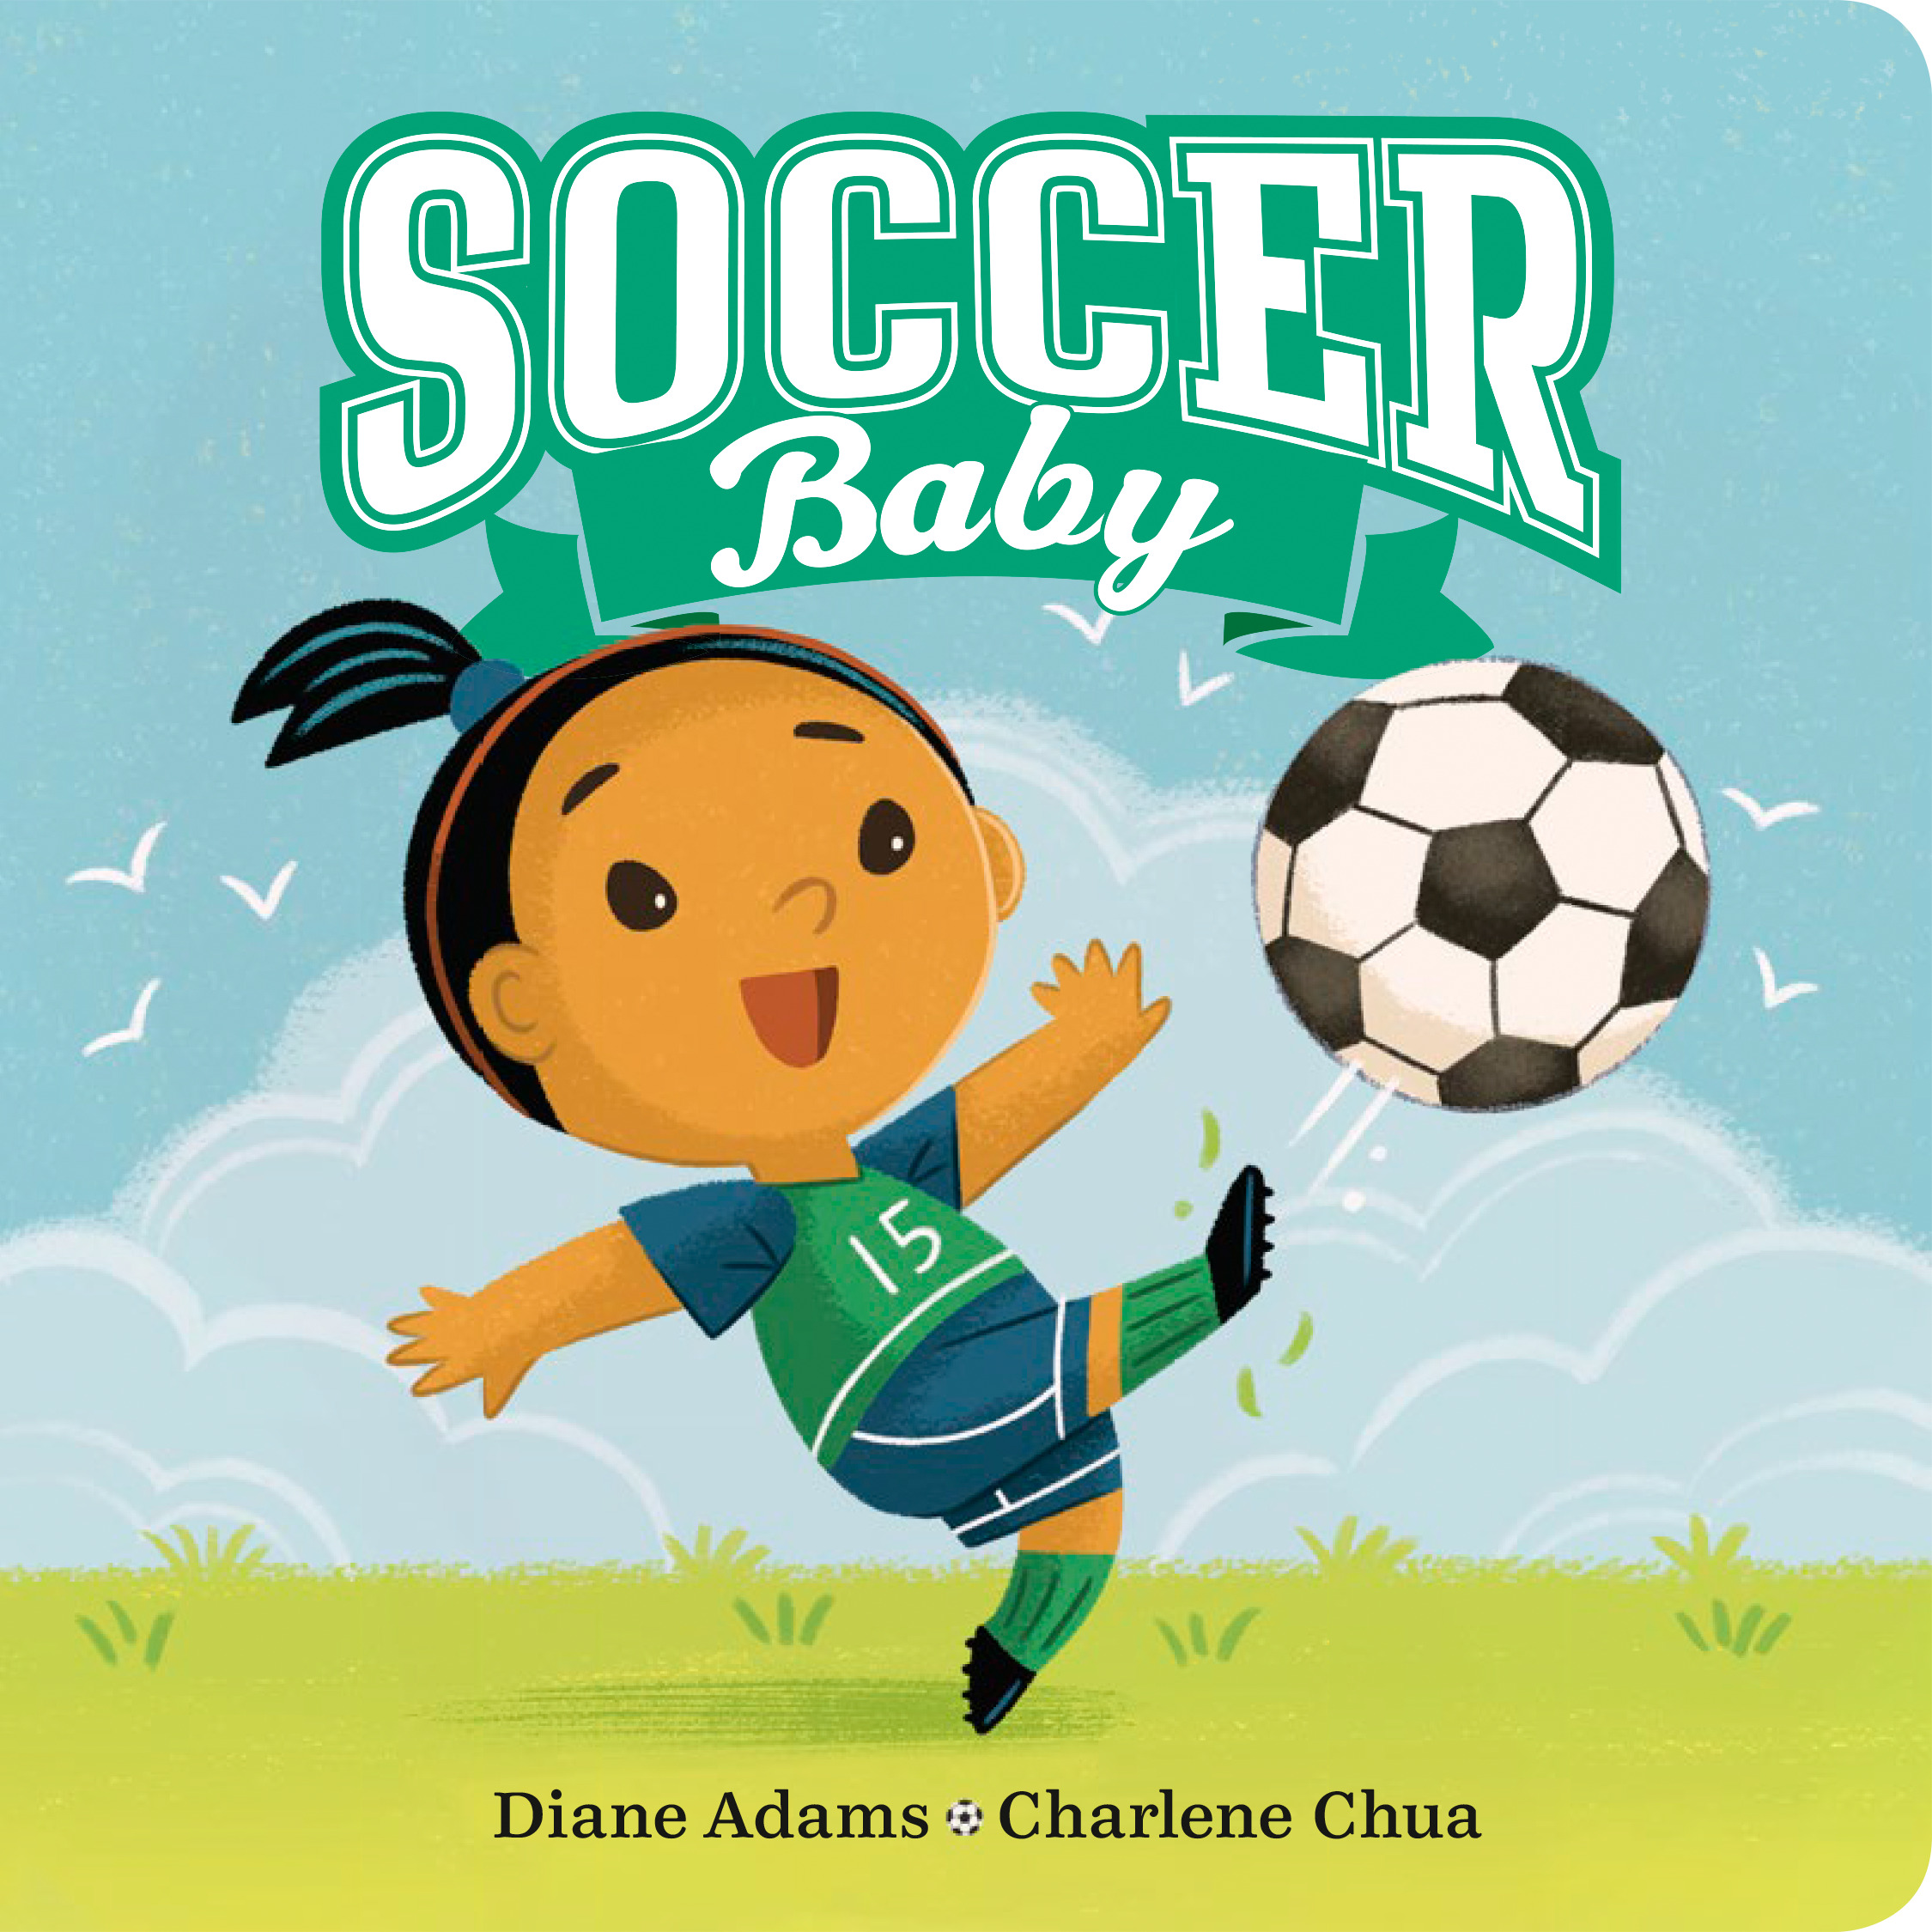 Soccer Baby | First reader